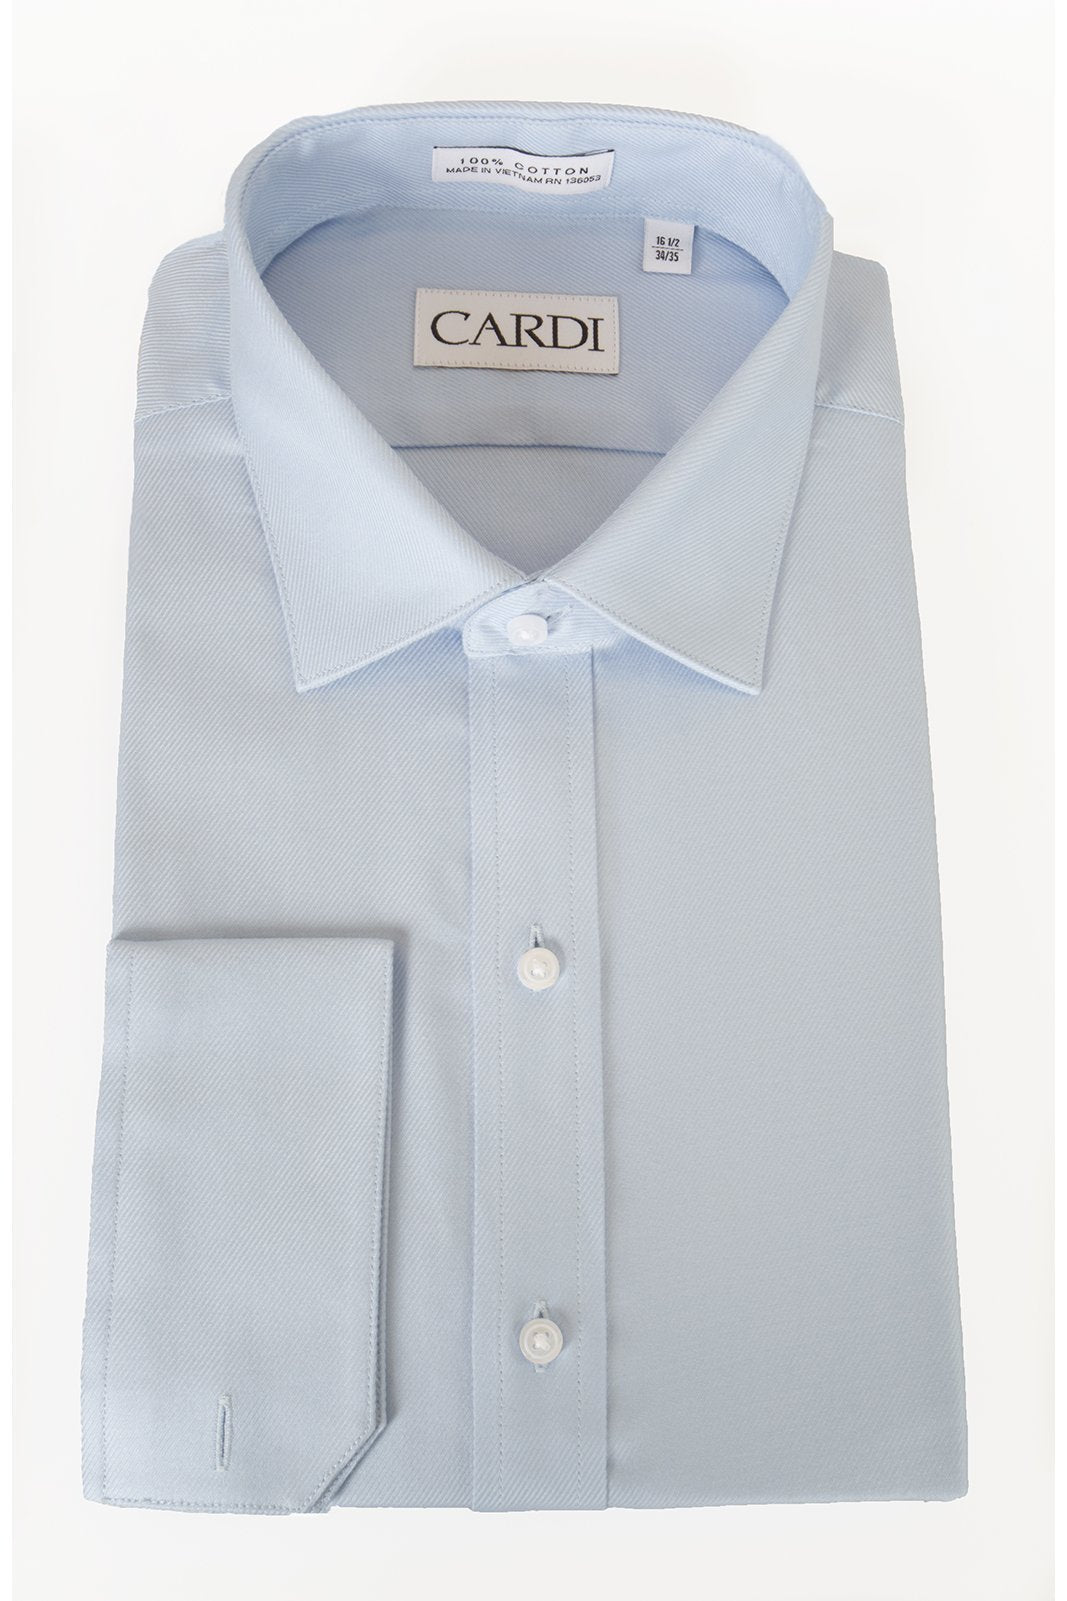 Jamison Blue Twill Spread Collar Dress Shirt - 14.5 / 32-33 